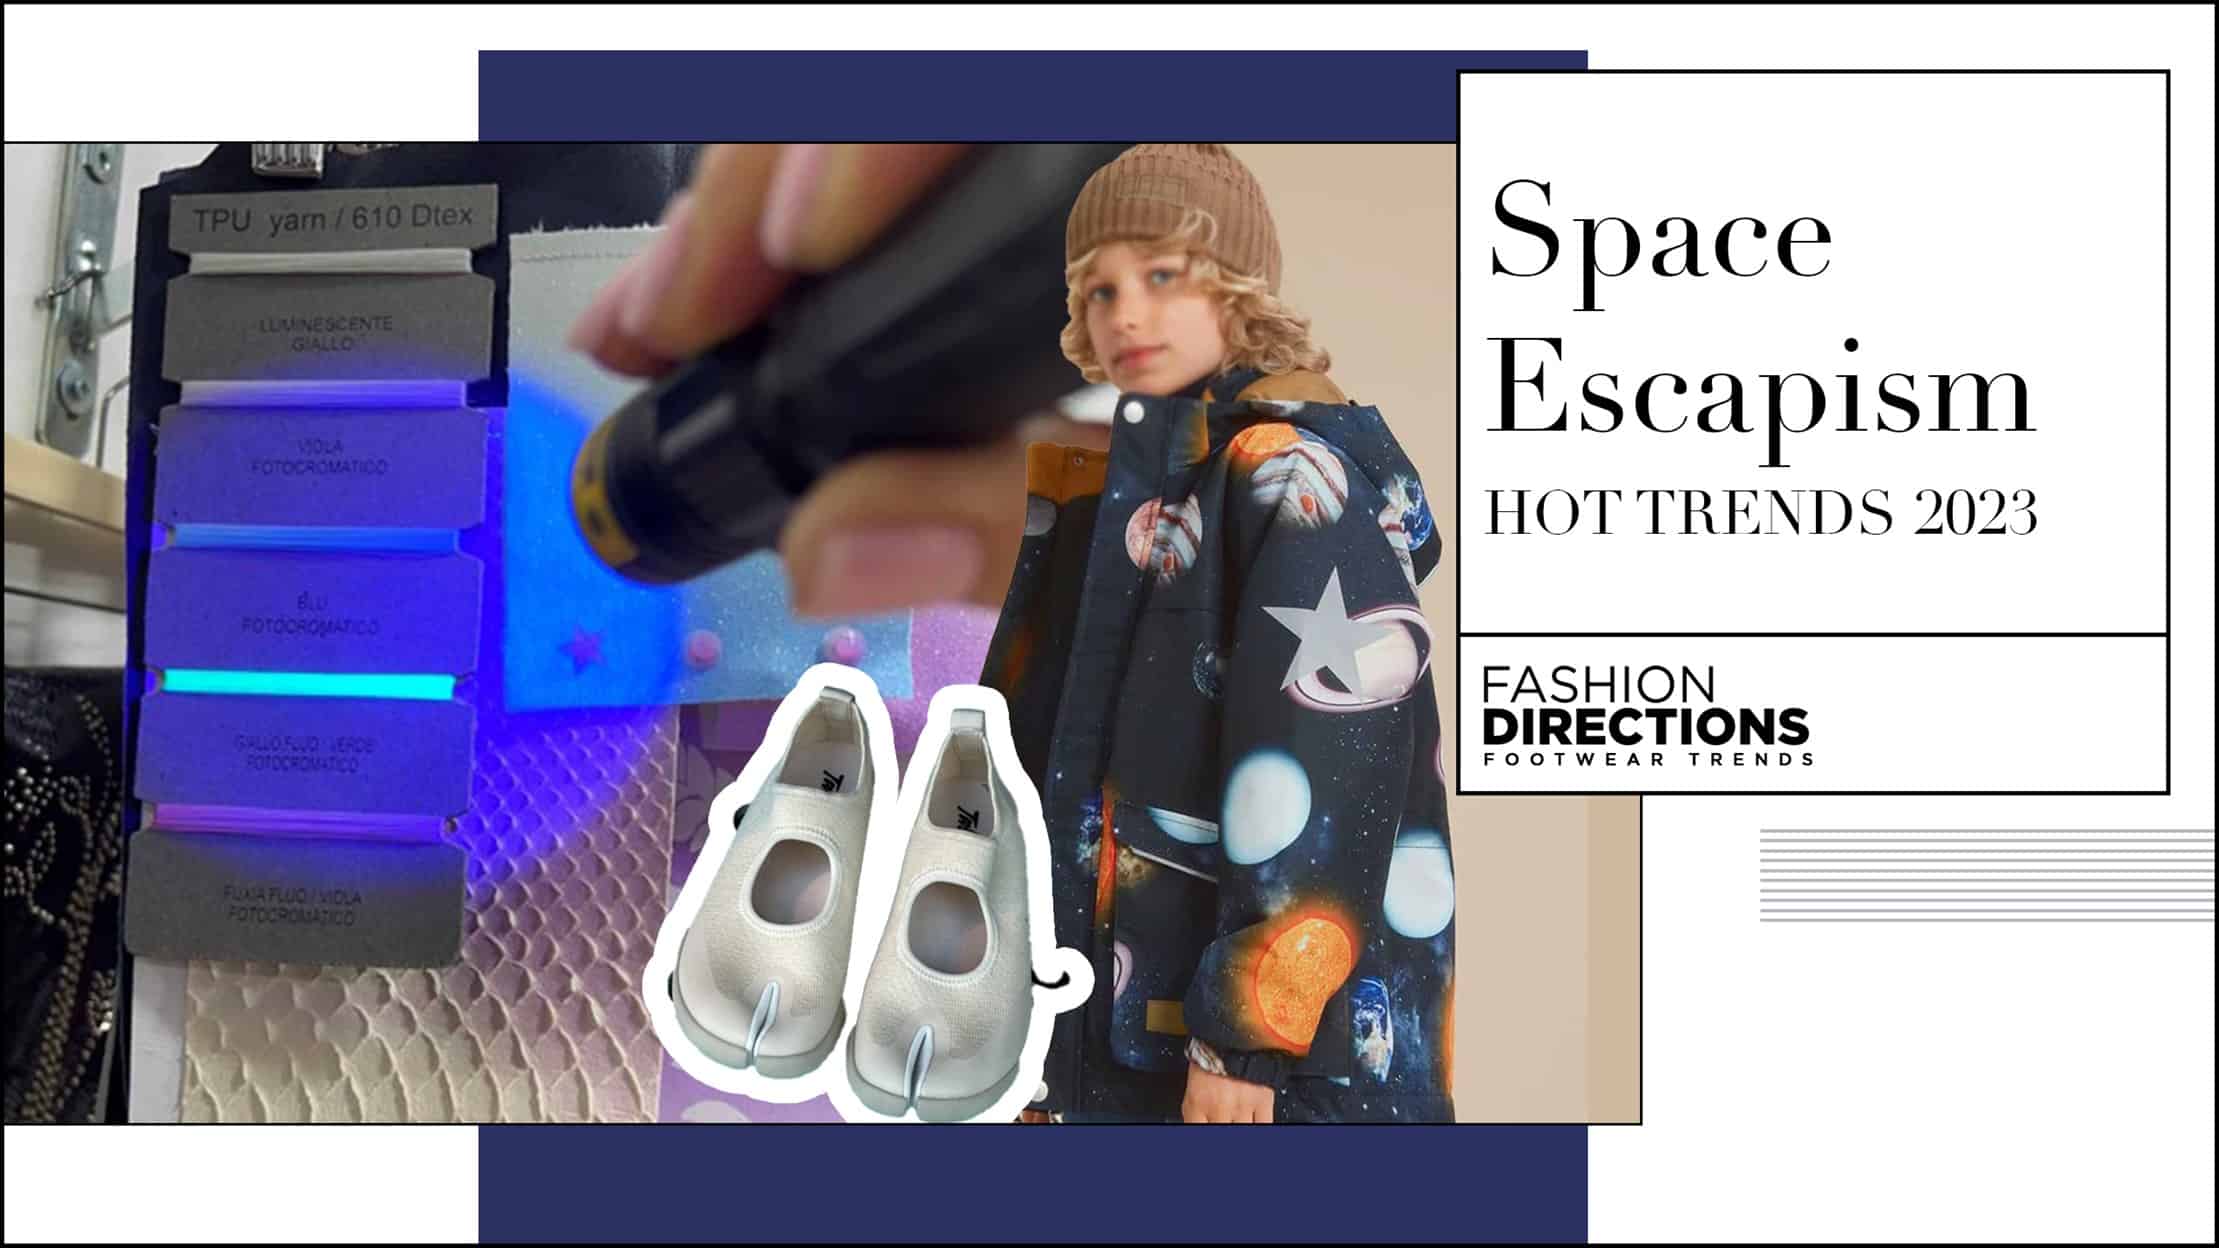 Space Escapism hot trends 2023 (1)